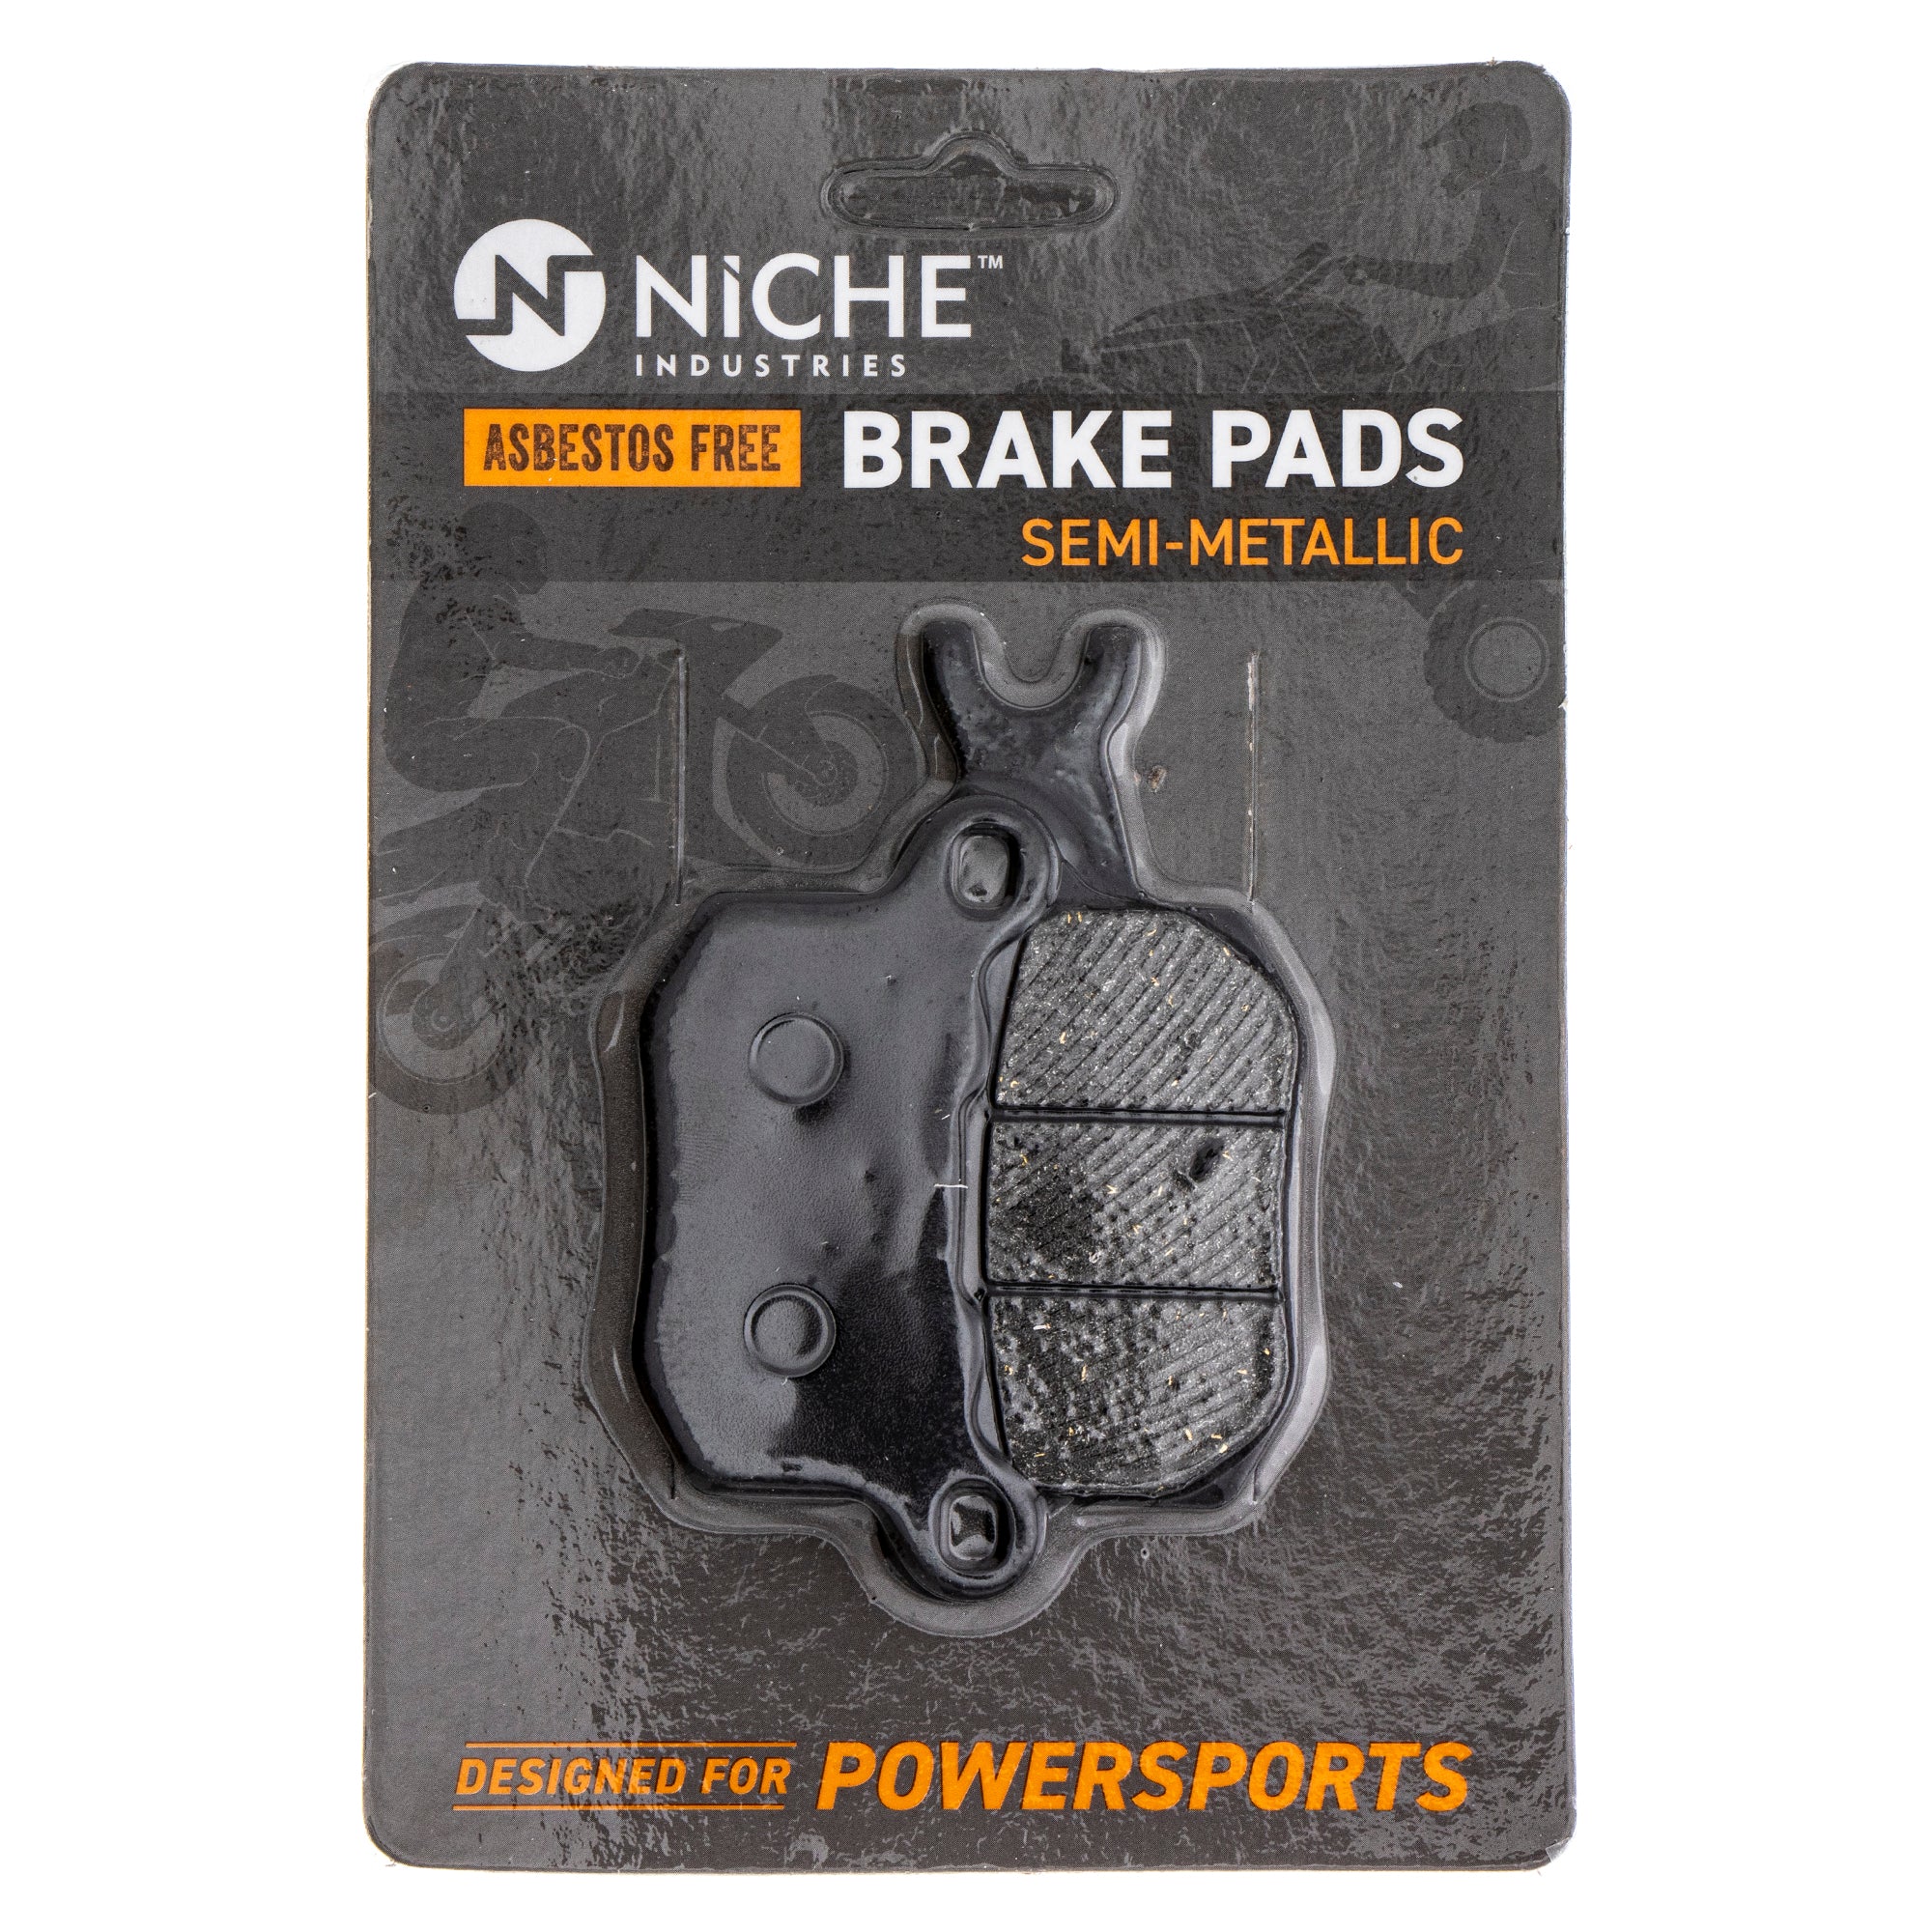 Semi-Metallic Brake Pads for BRP Can-Am Ski-Doo Sea-Doo Traxter Defender 715900381 NICHE 519-KPA2331D